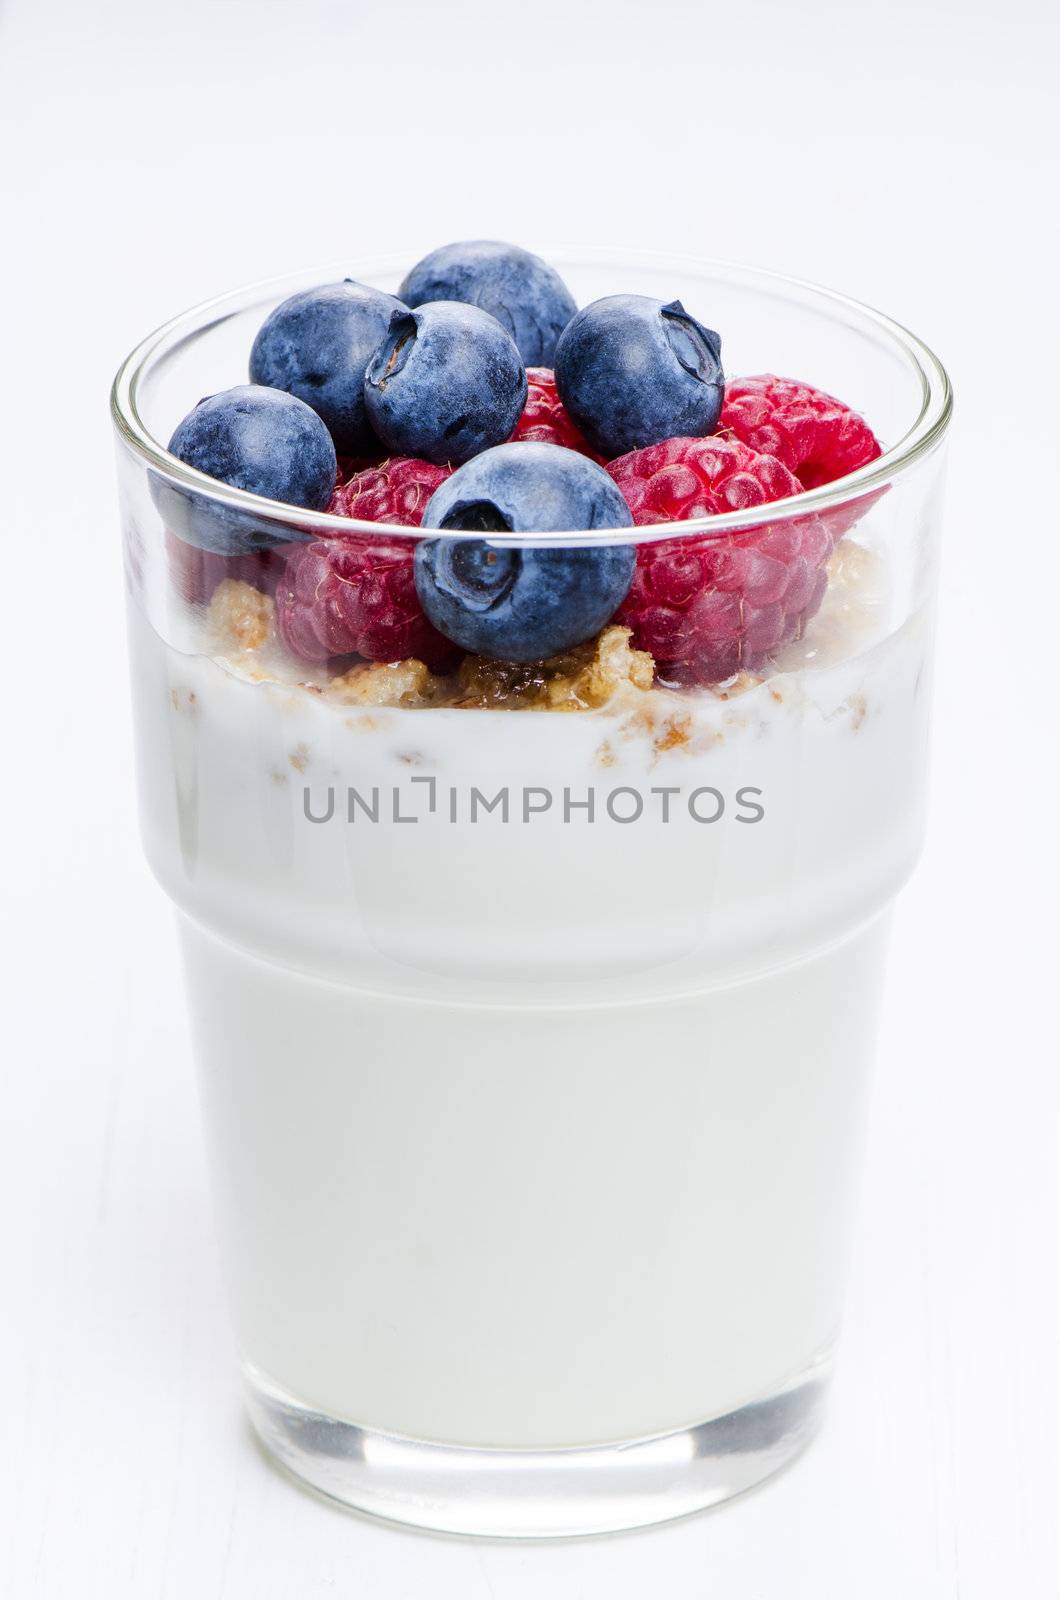 Yogurt with raspberries and blueberries in glass